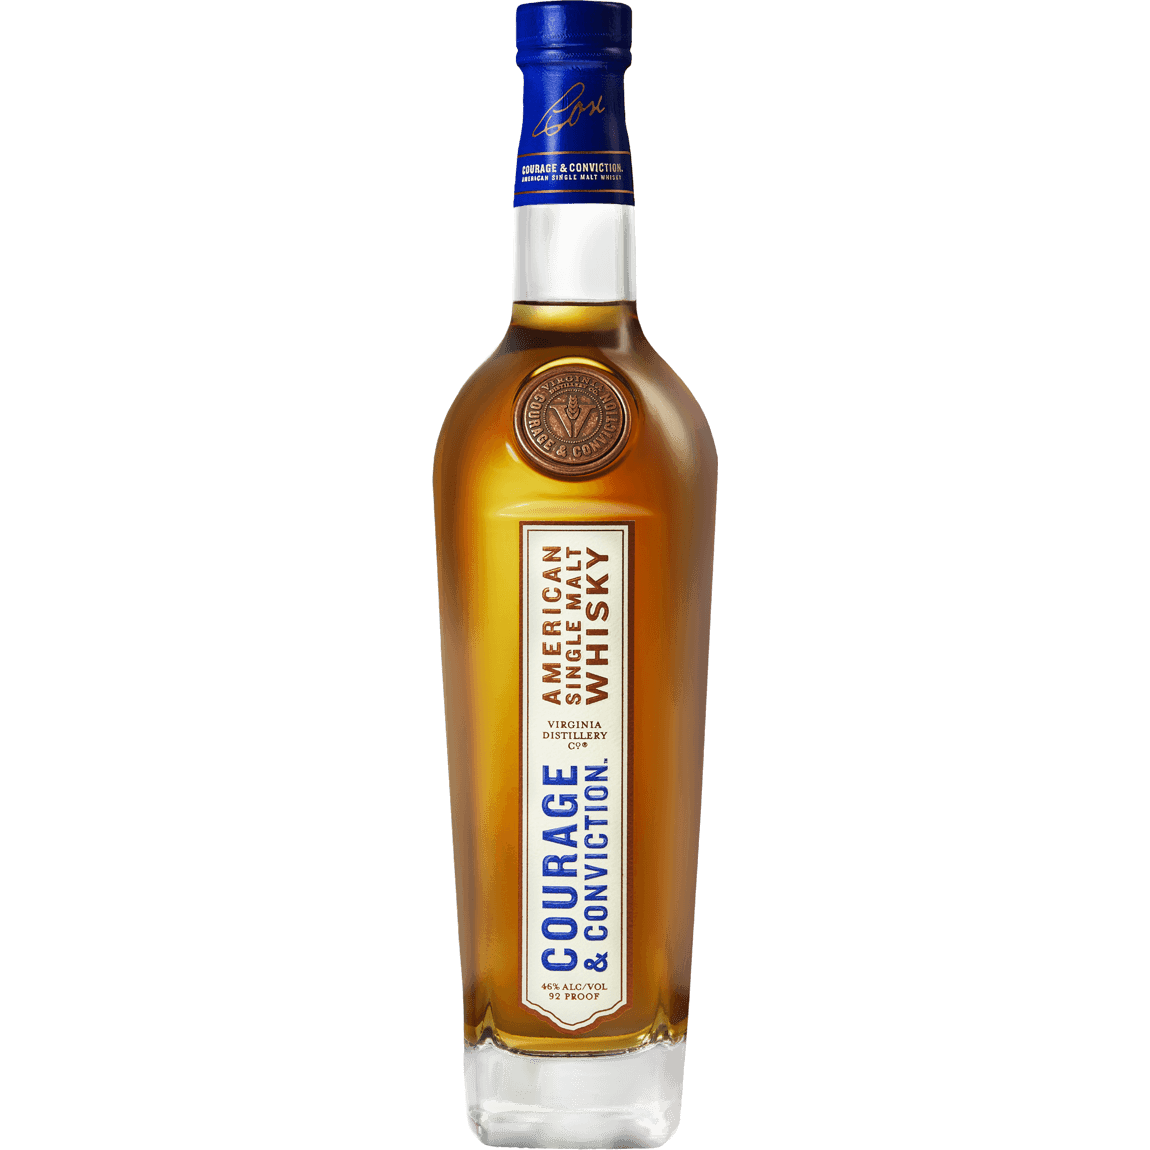 Virginia Distillery Company - Courage and Conviction American Single Malt Whisky (750)